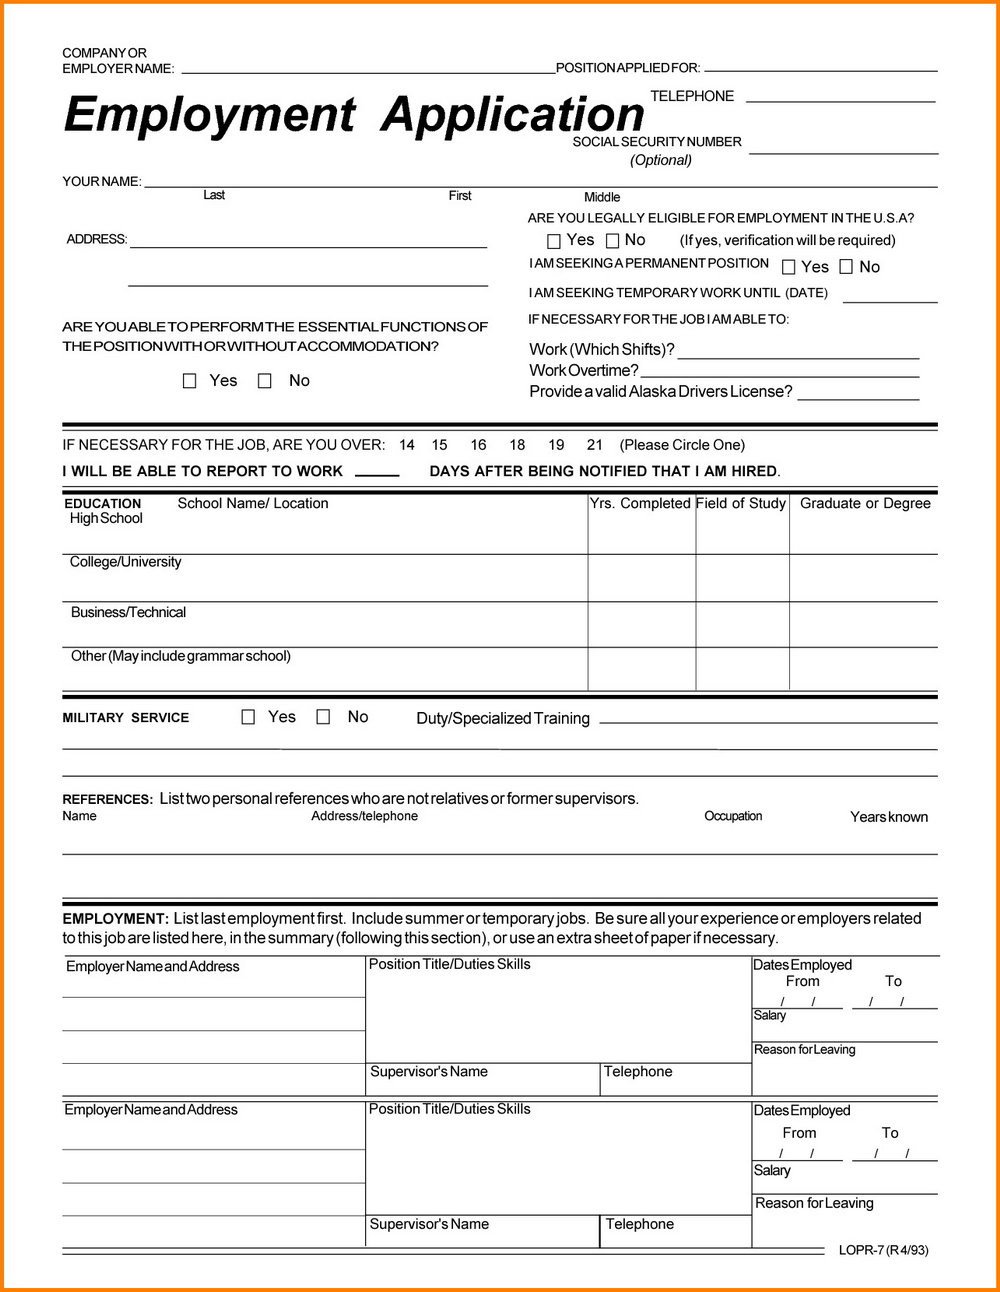 Chipotle Application Online form Chipotle Job Application Line form Job Applications